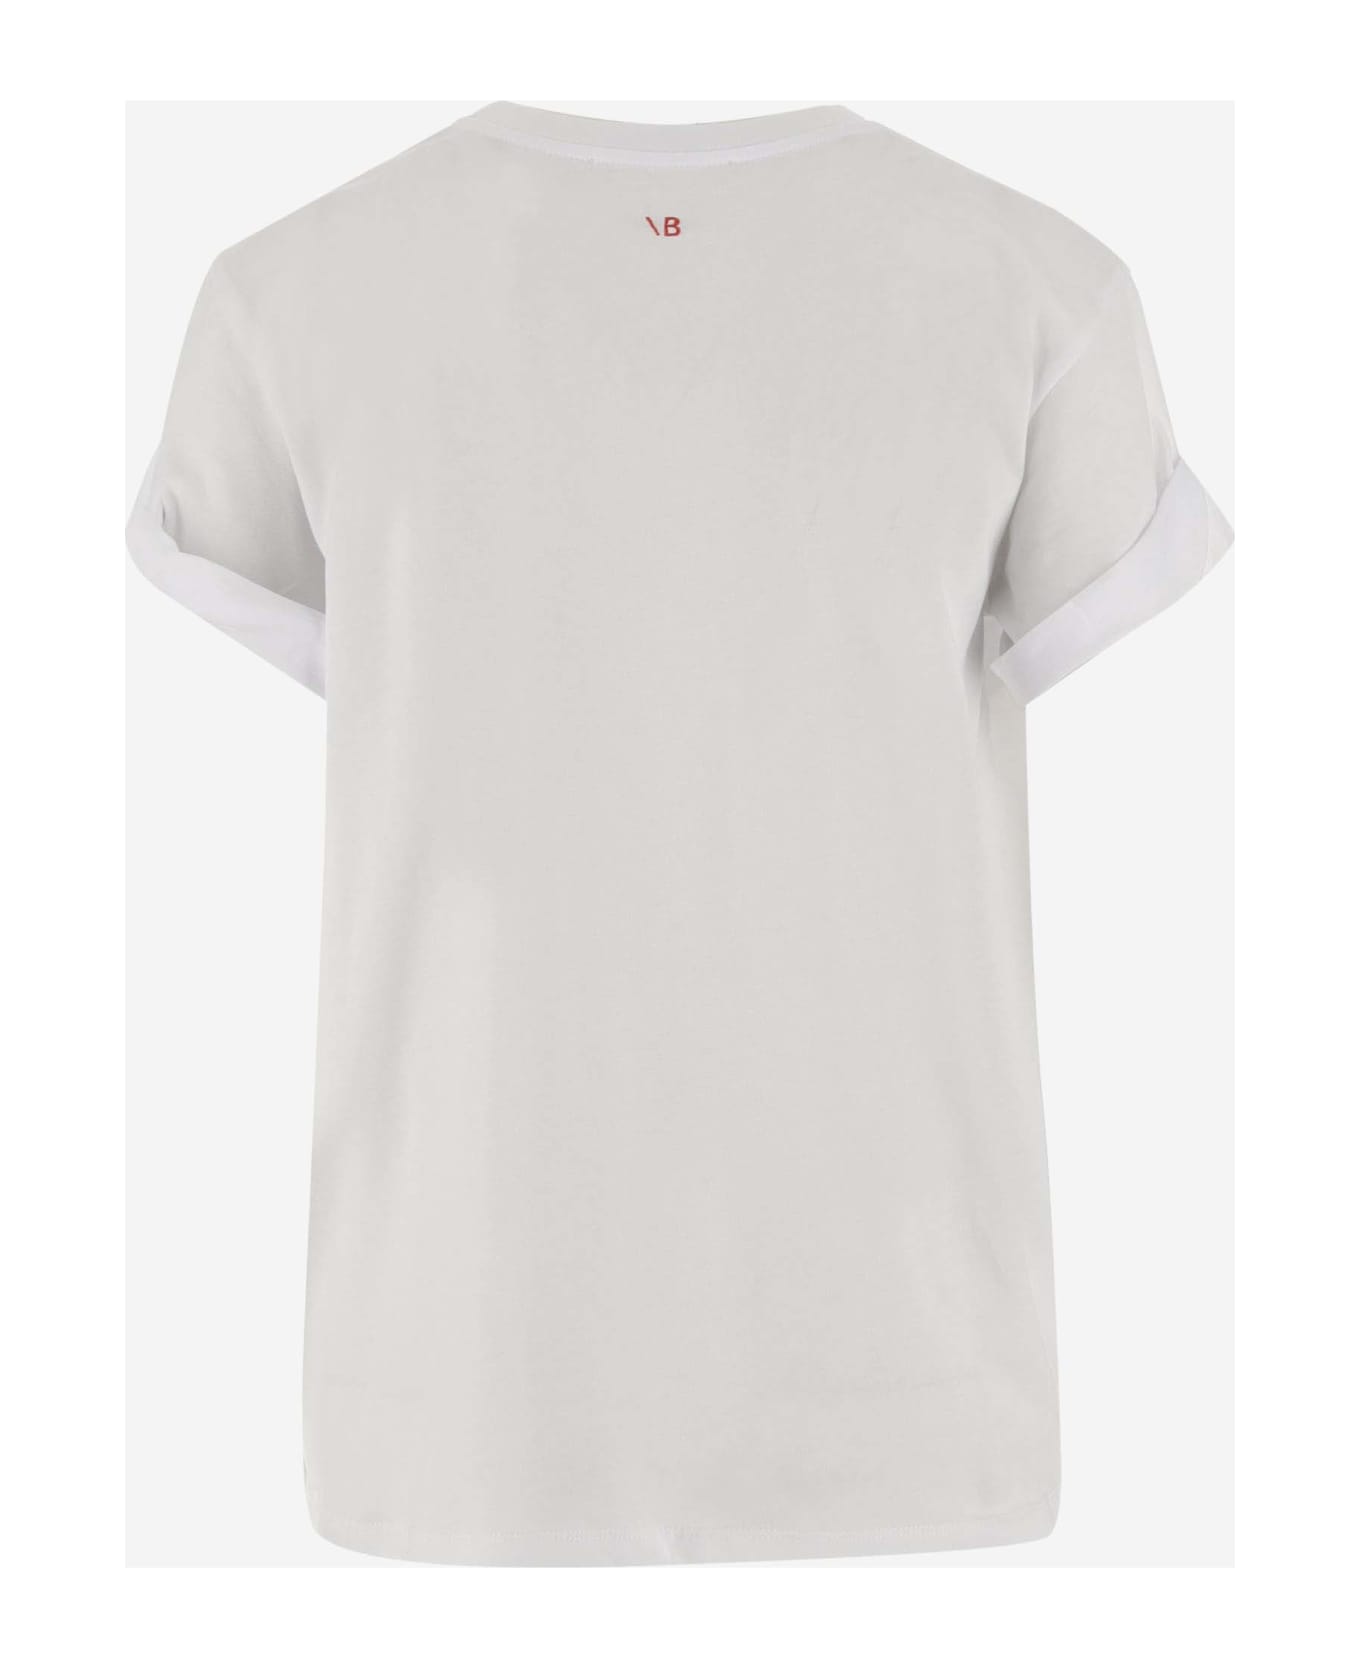 Victoria Beckham Cotton T-shirt With Print - White